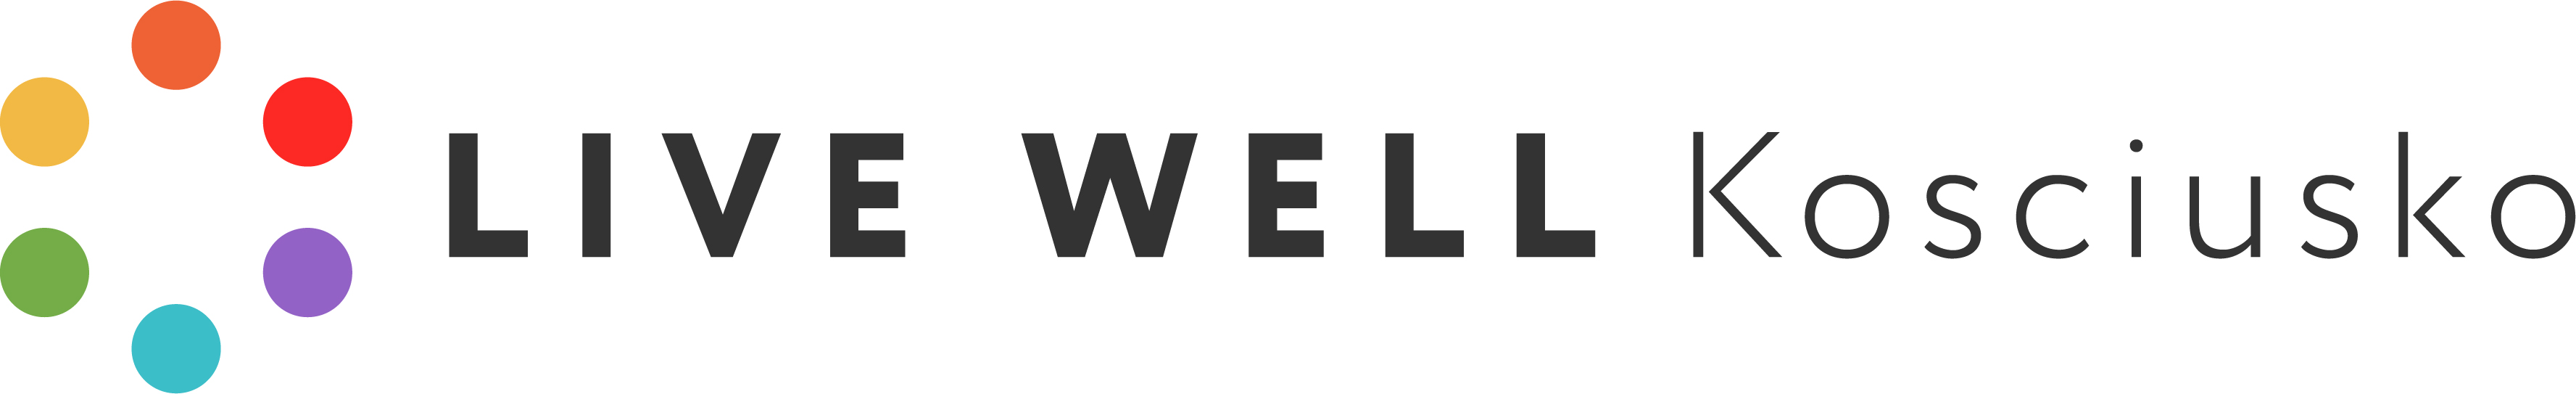 Live Well Kosciusko logo